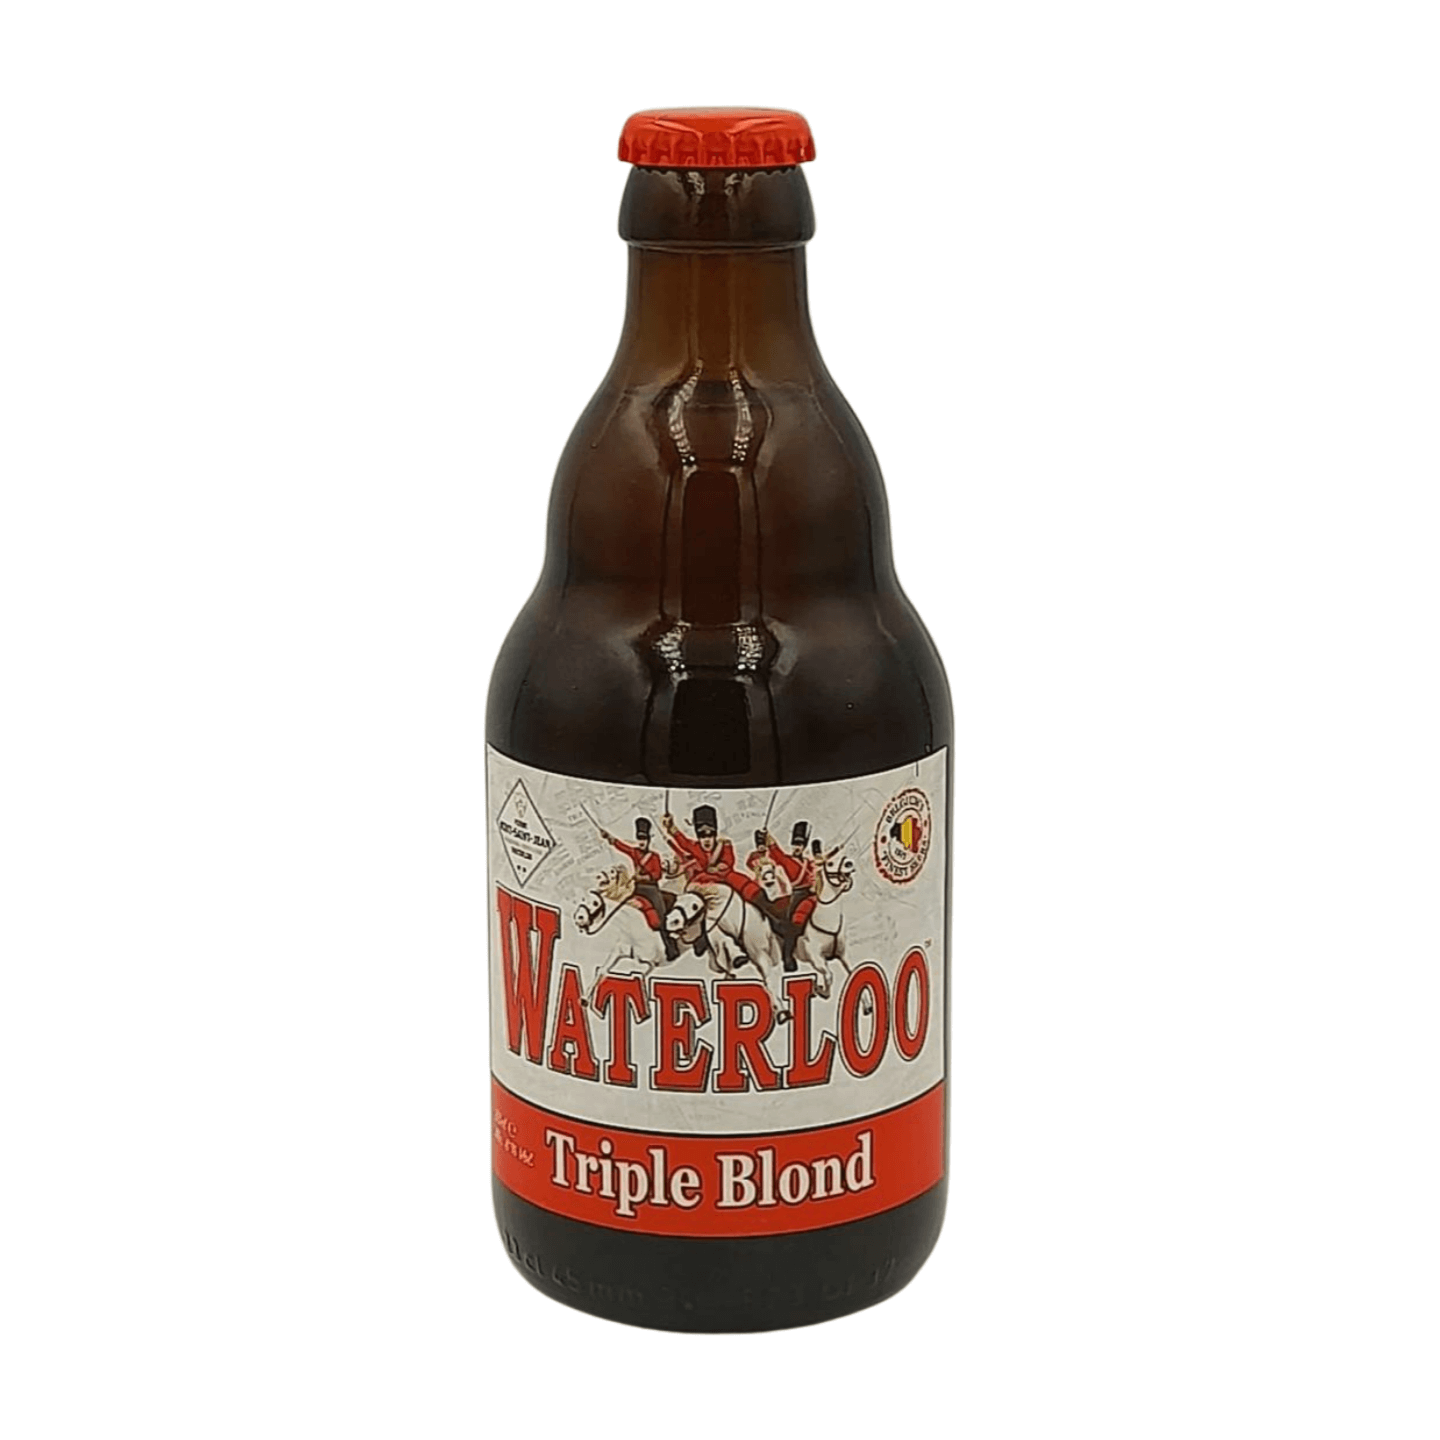 Waterloo Brewery Mont-St-Jean Waterloo Triple Blond | Tripel Webshop Online Verdins Bierwinkel Rotterdam